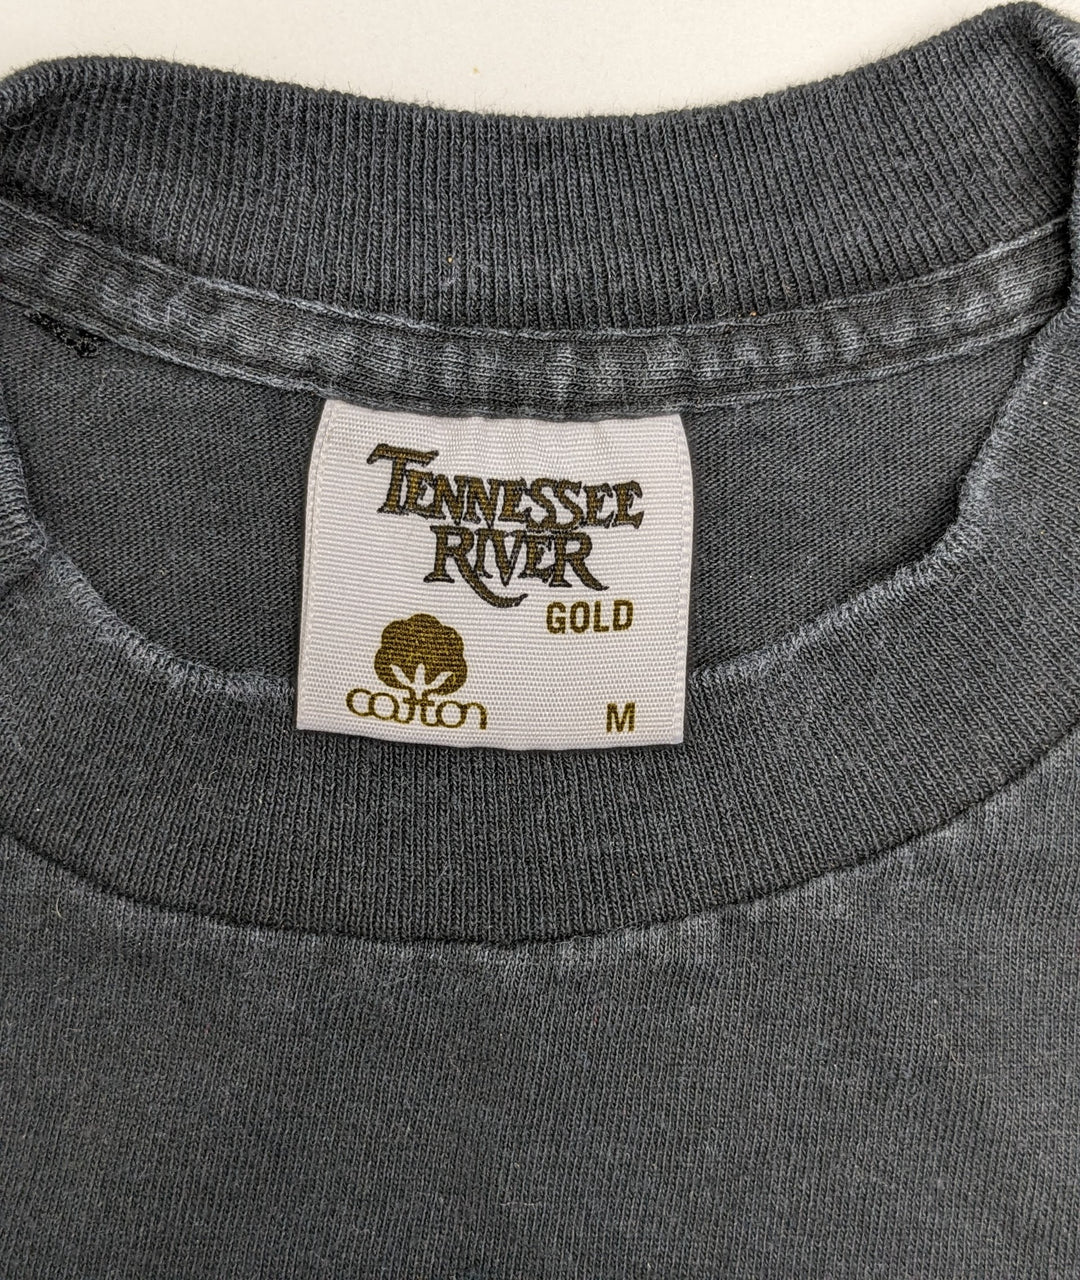 Tennessee River T-Shirt 1 pc 1 lb E0122217 - Raghouse